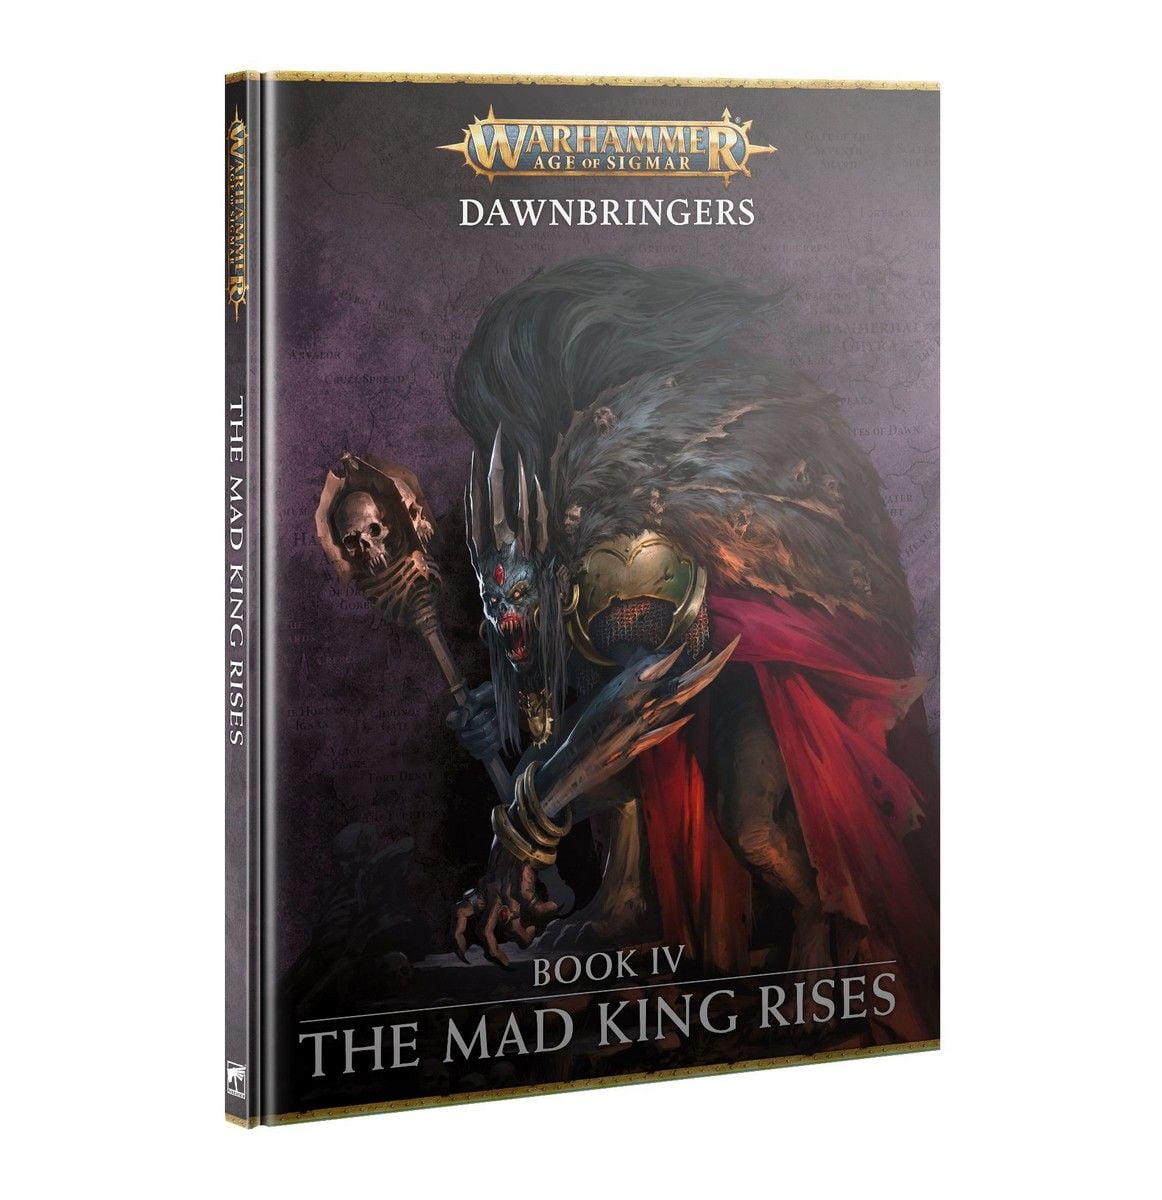 Dawnbringers Book 4 - The Mad King Rises